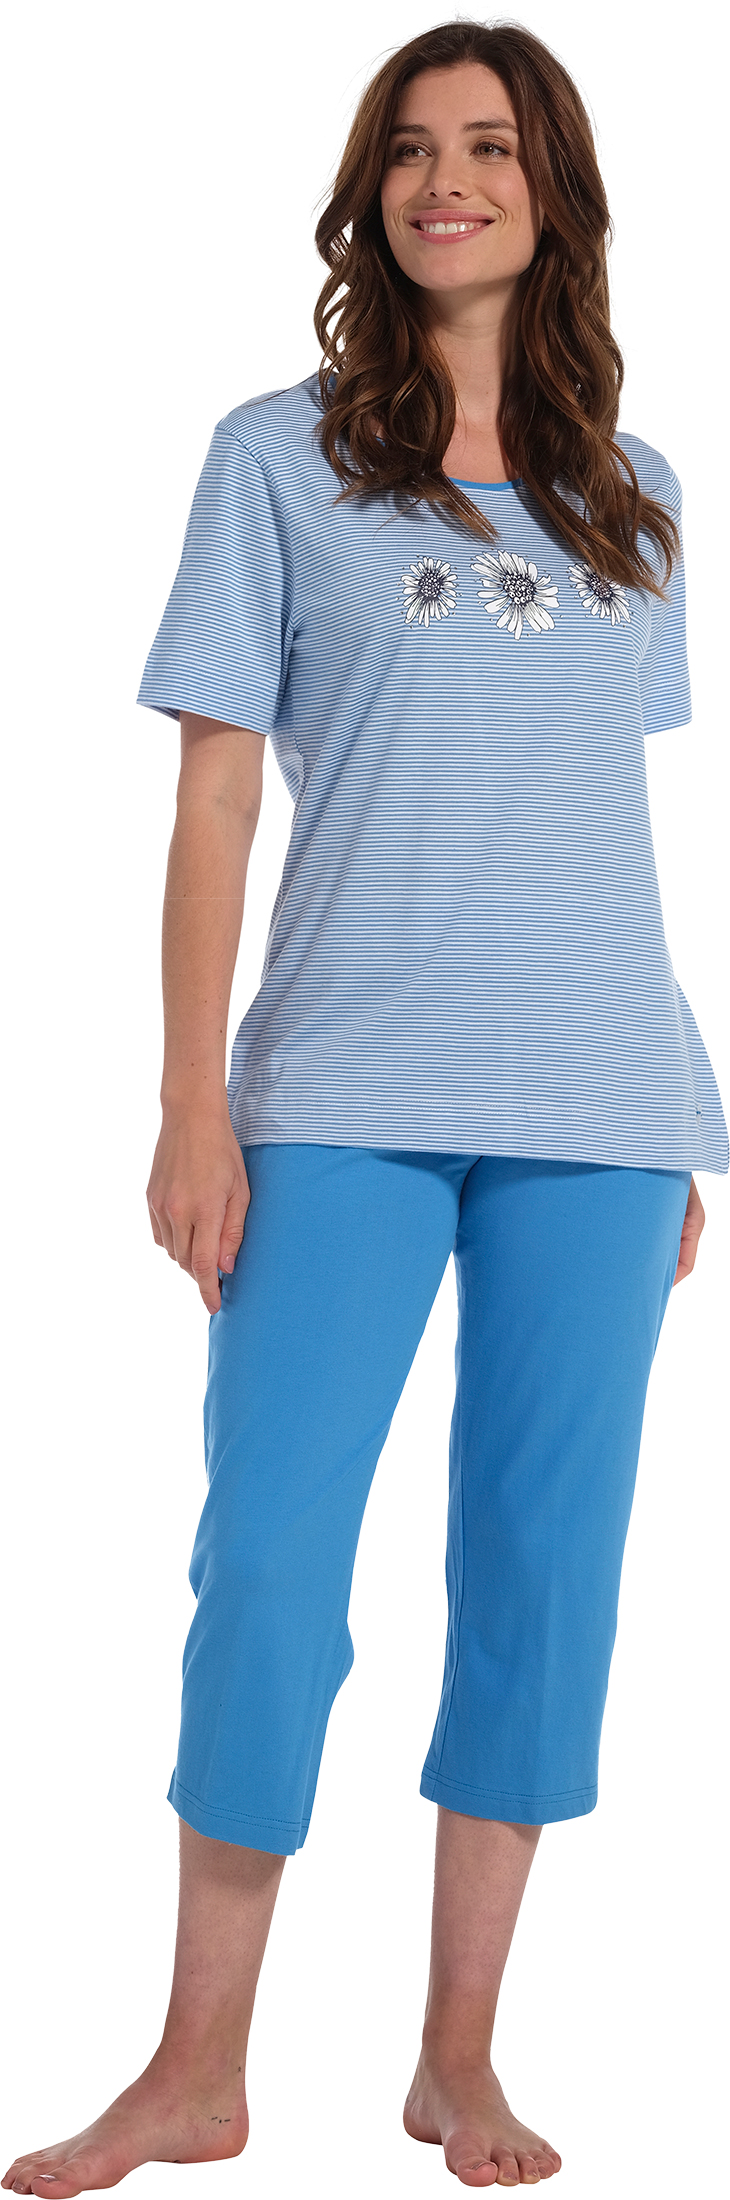 Pastunette dames pyjama capri 20231-130-2 - Blauw - 44